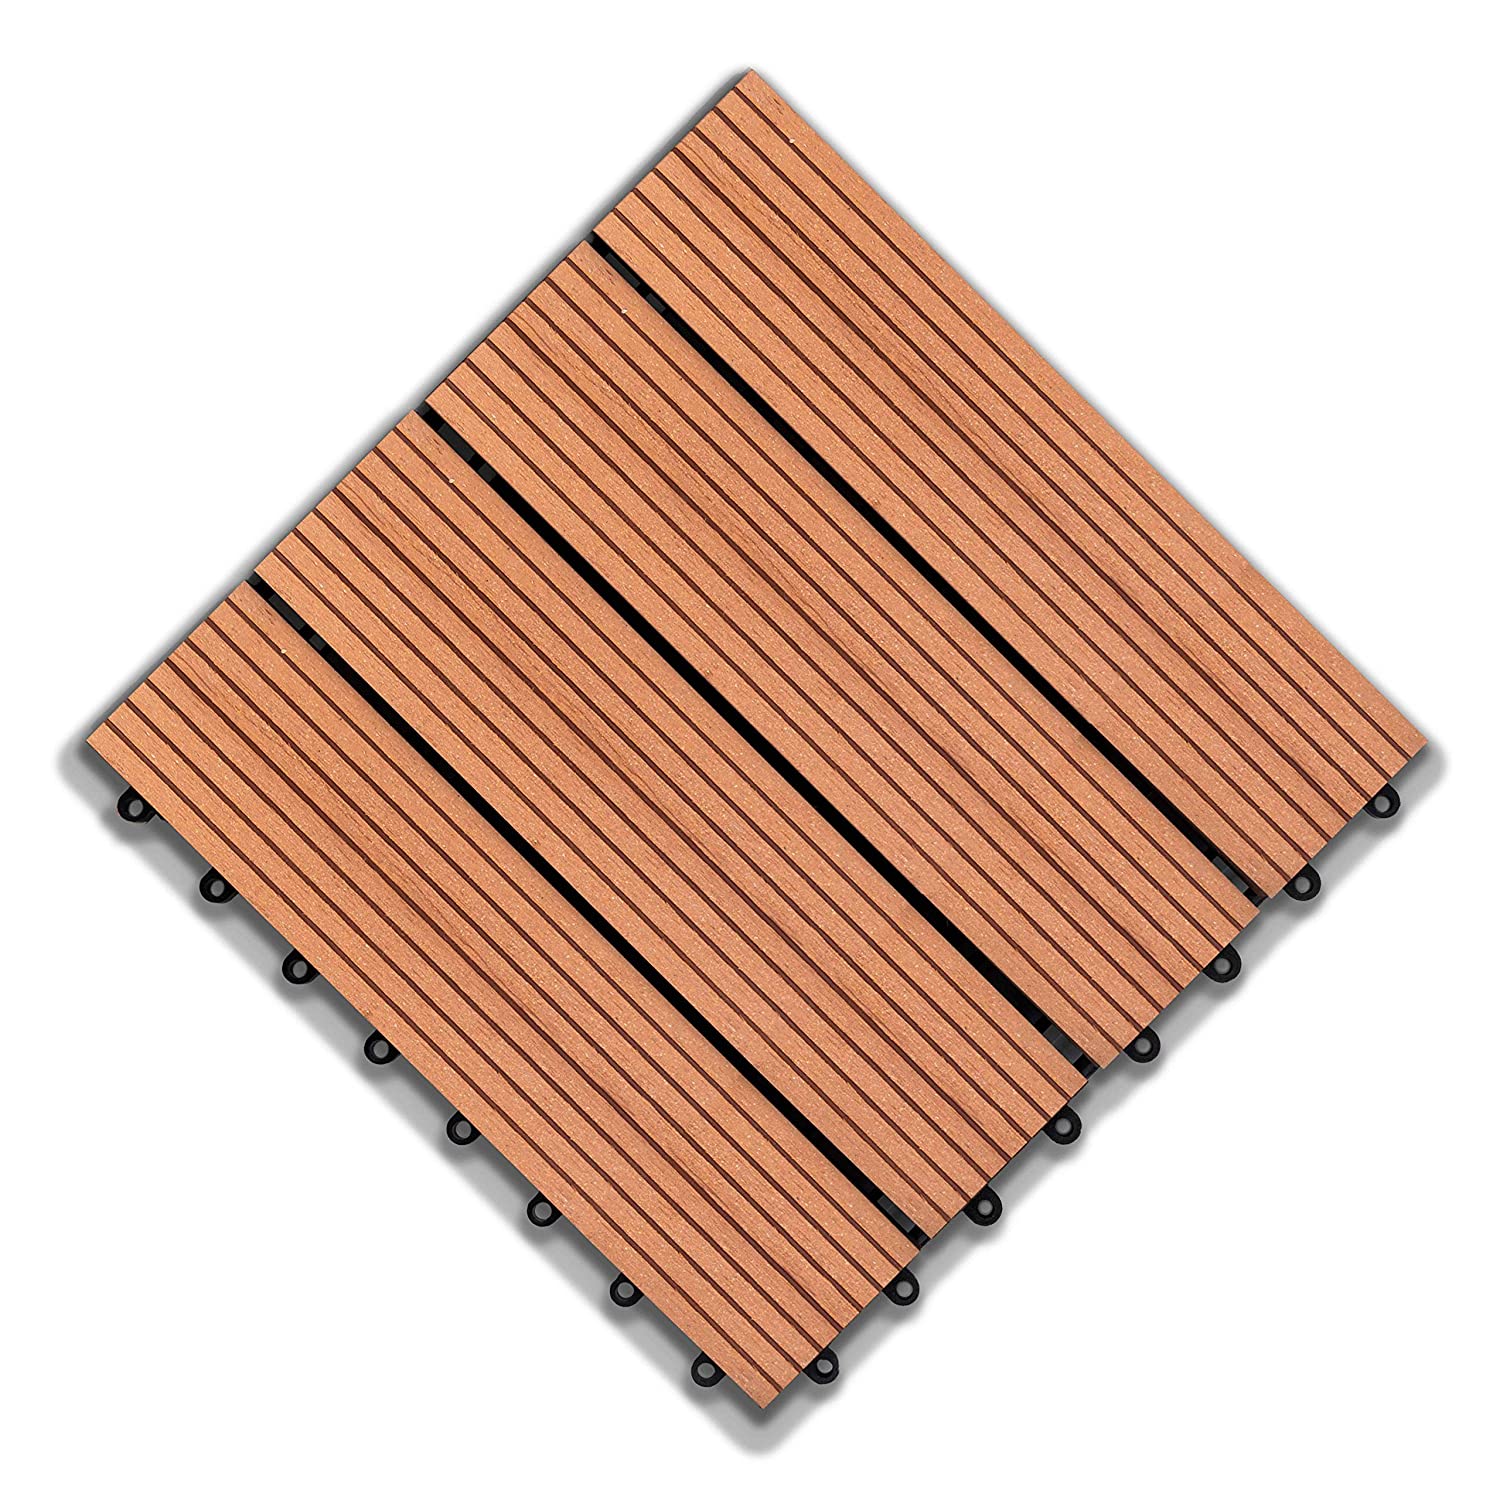 Rosetta- Interlocking Deck Tiles Waterproof Outdoor Flooring- Red Cedar 